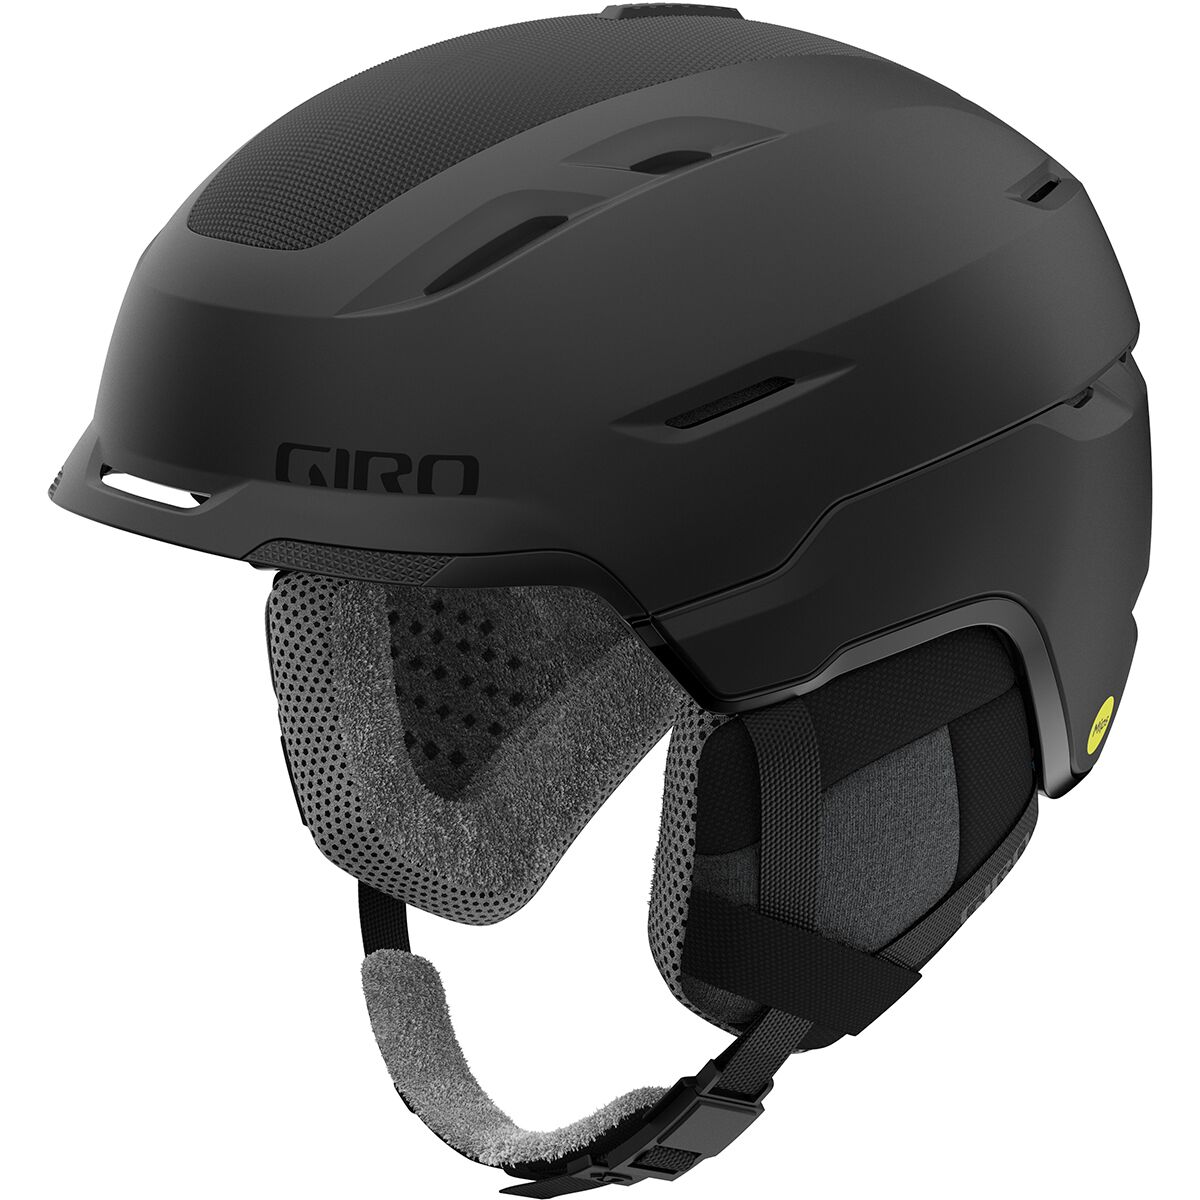 Giro Tenaya Spherical Free Ride Helmet - Women's